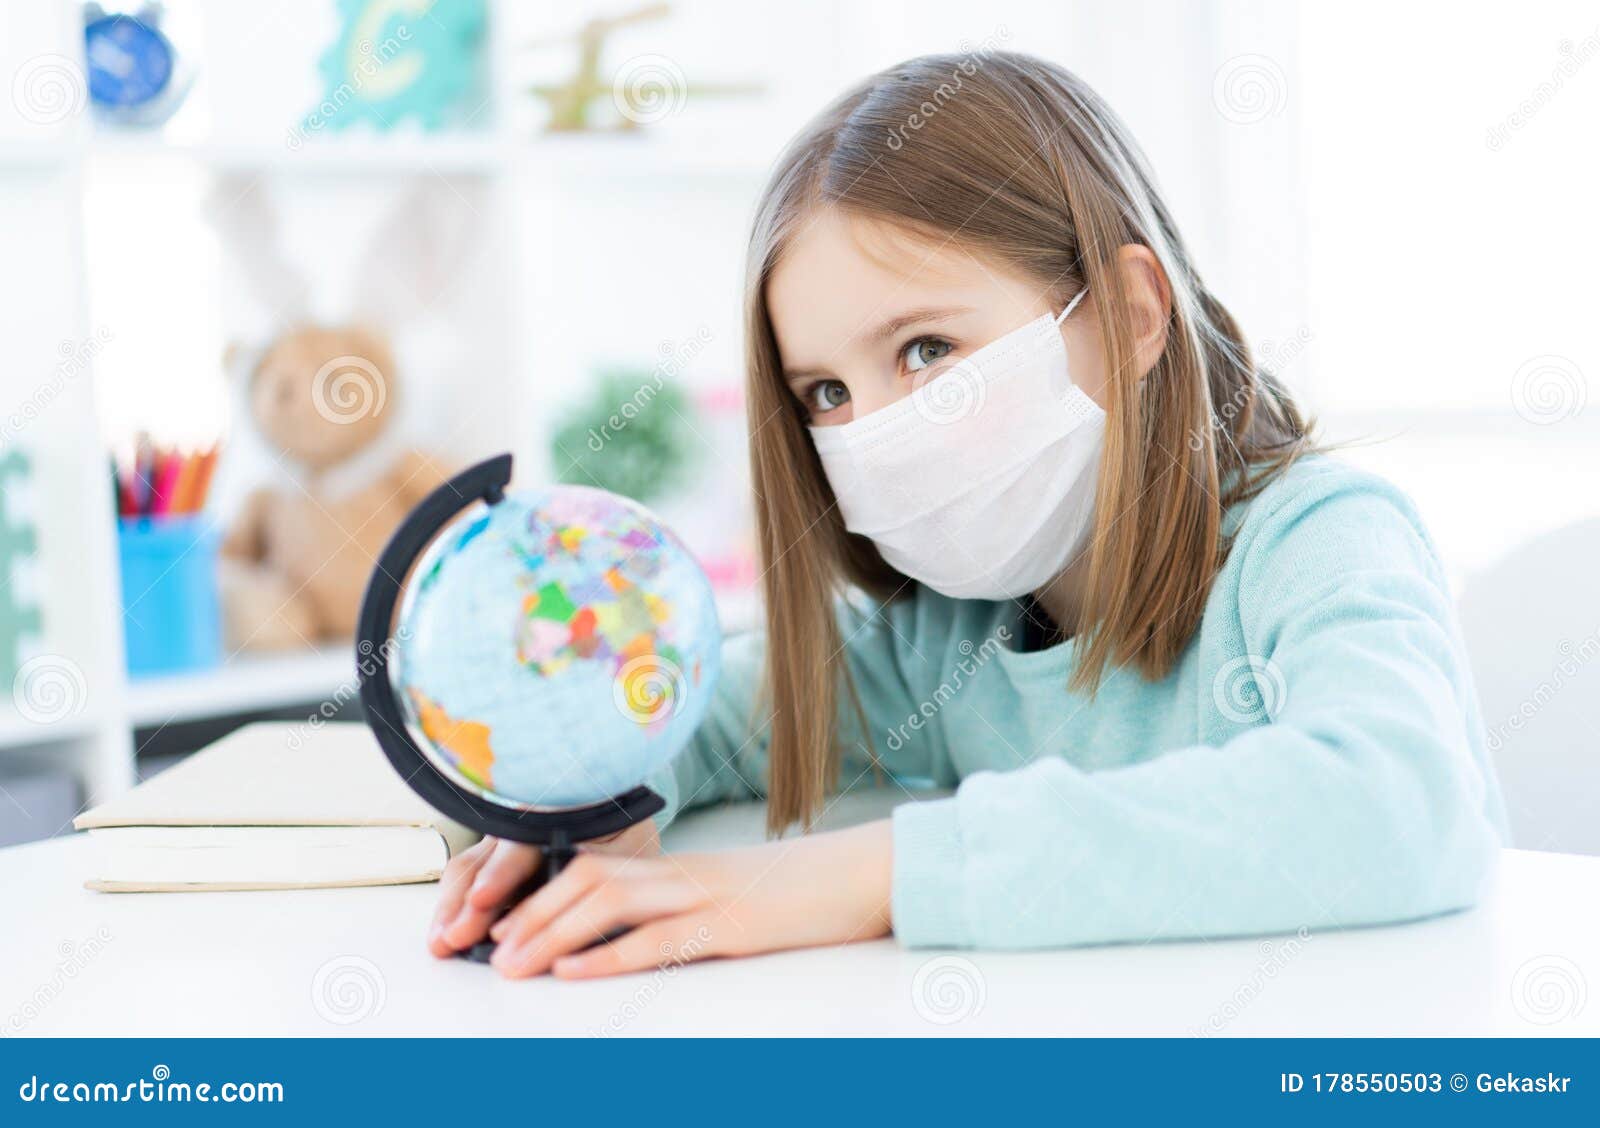 girl at home during quarantine